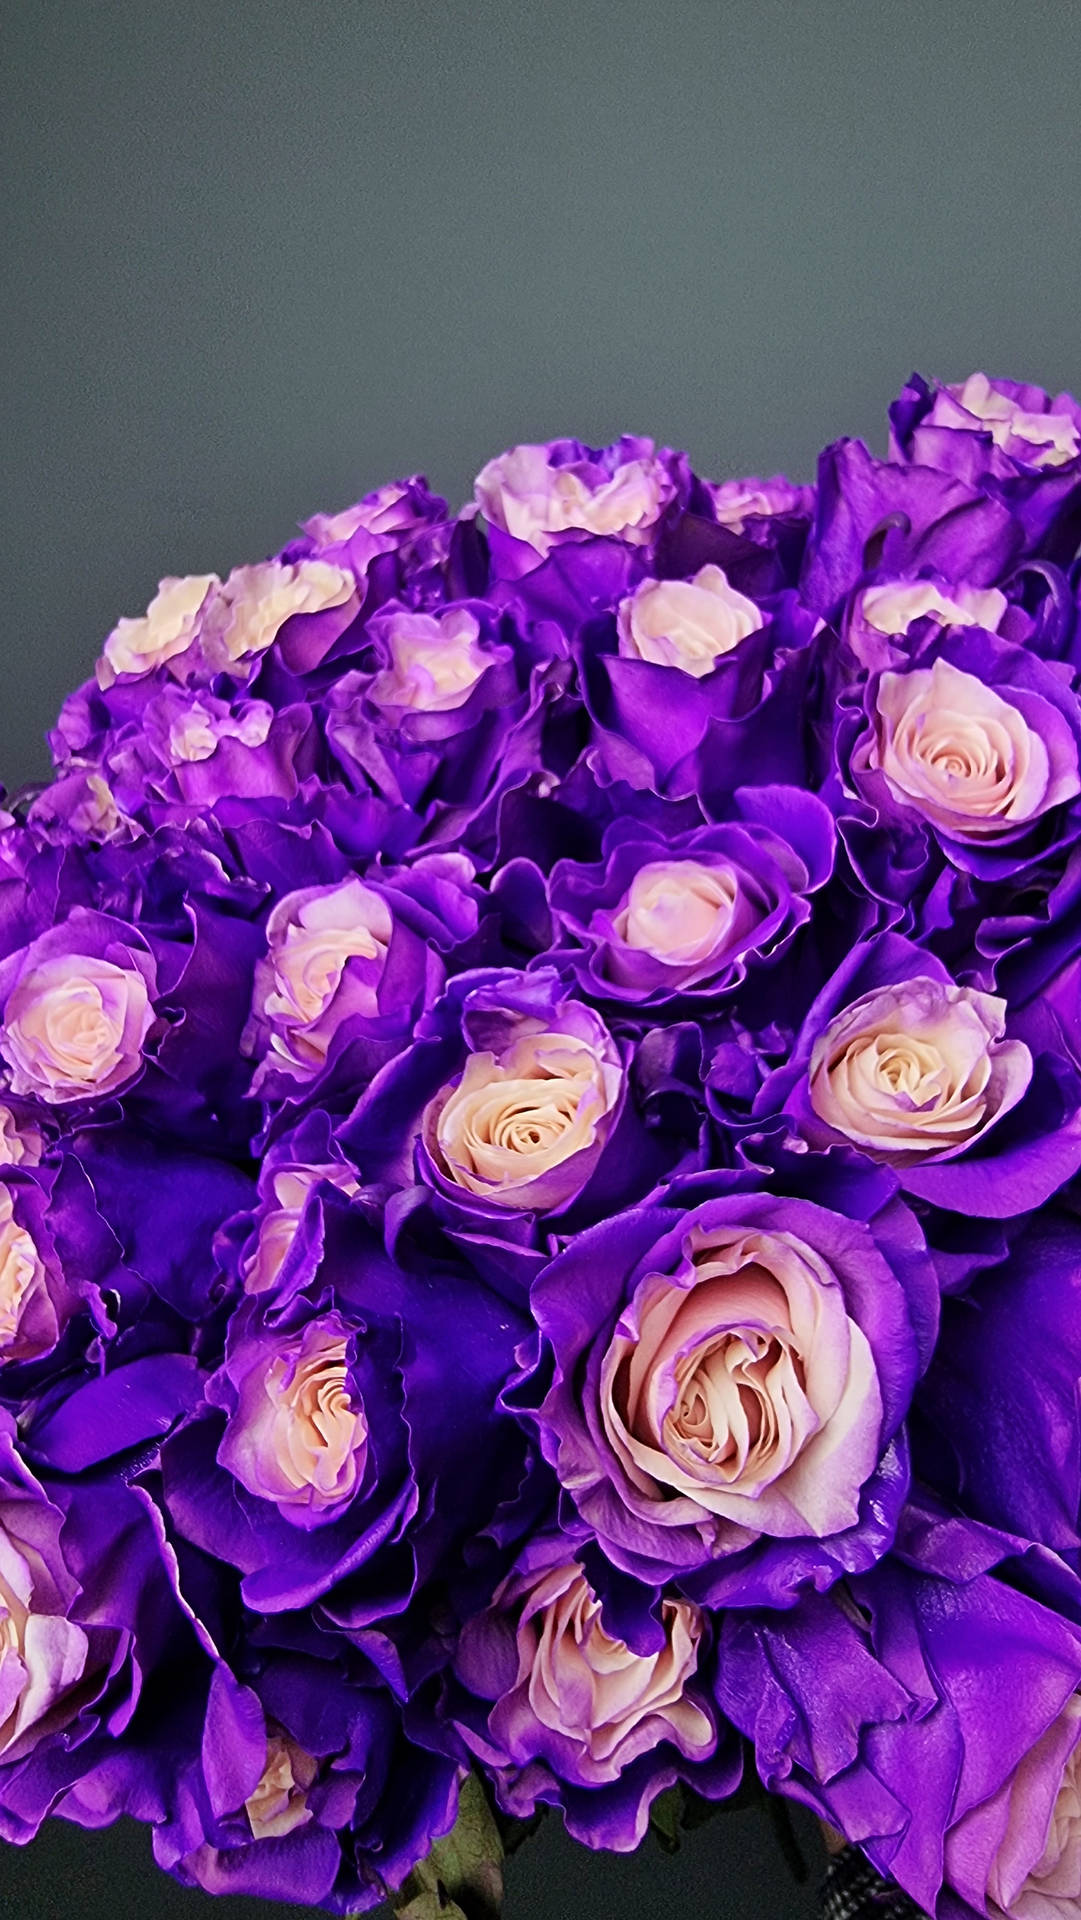 Stunning Bouquet of Purple Roses Wallpaper